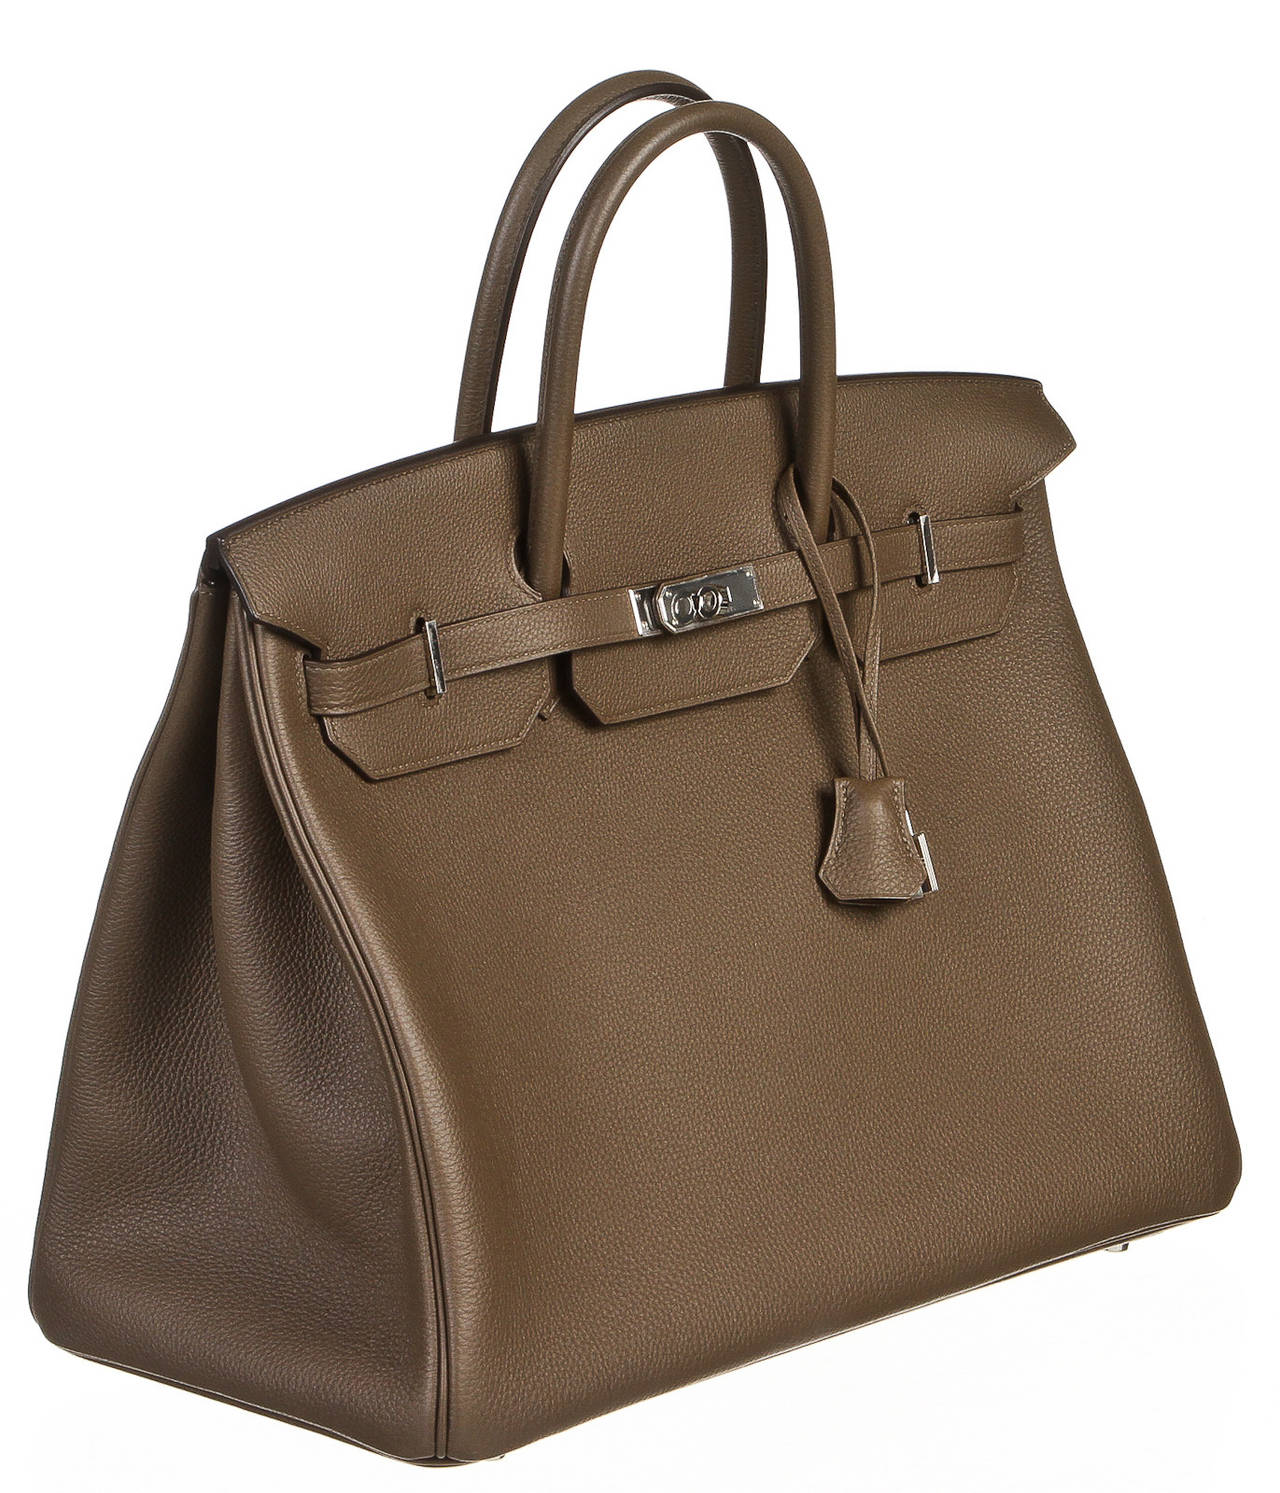 Hermes Taupe 40cm Togo Leather Birkin Handbag SHW In New Condition For Sale In Corona Del Mar, CA